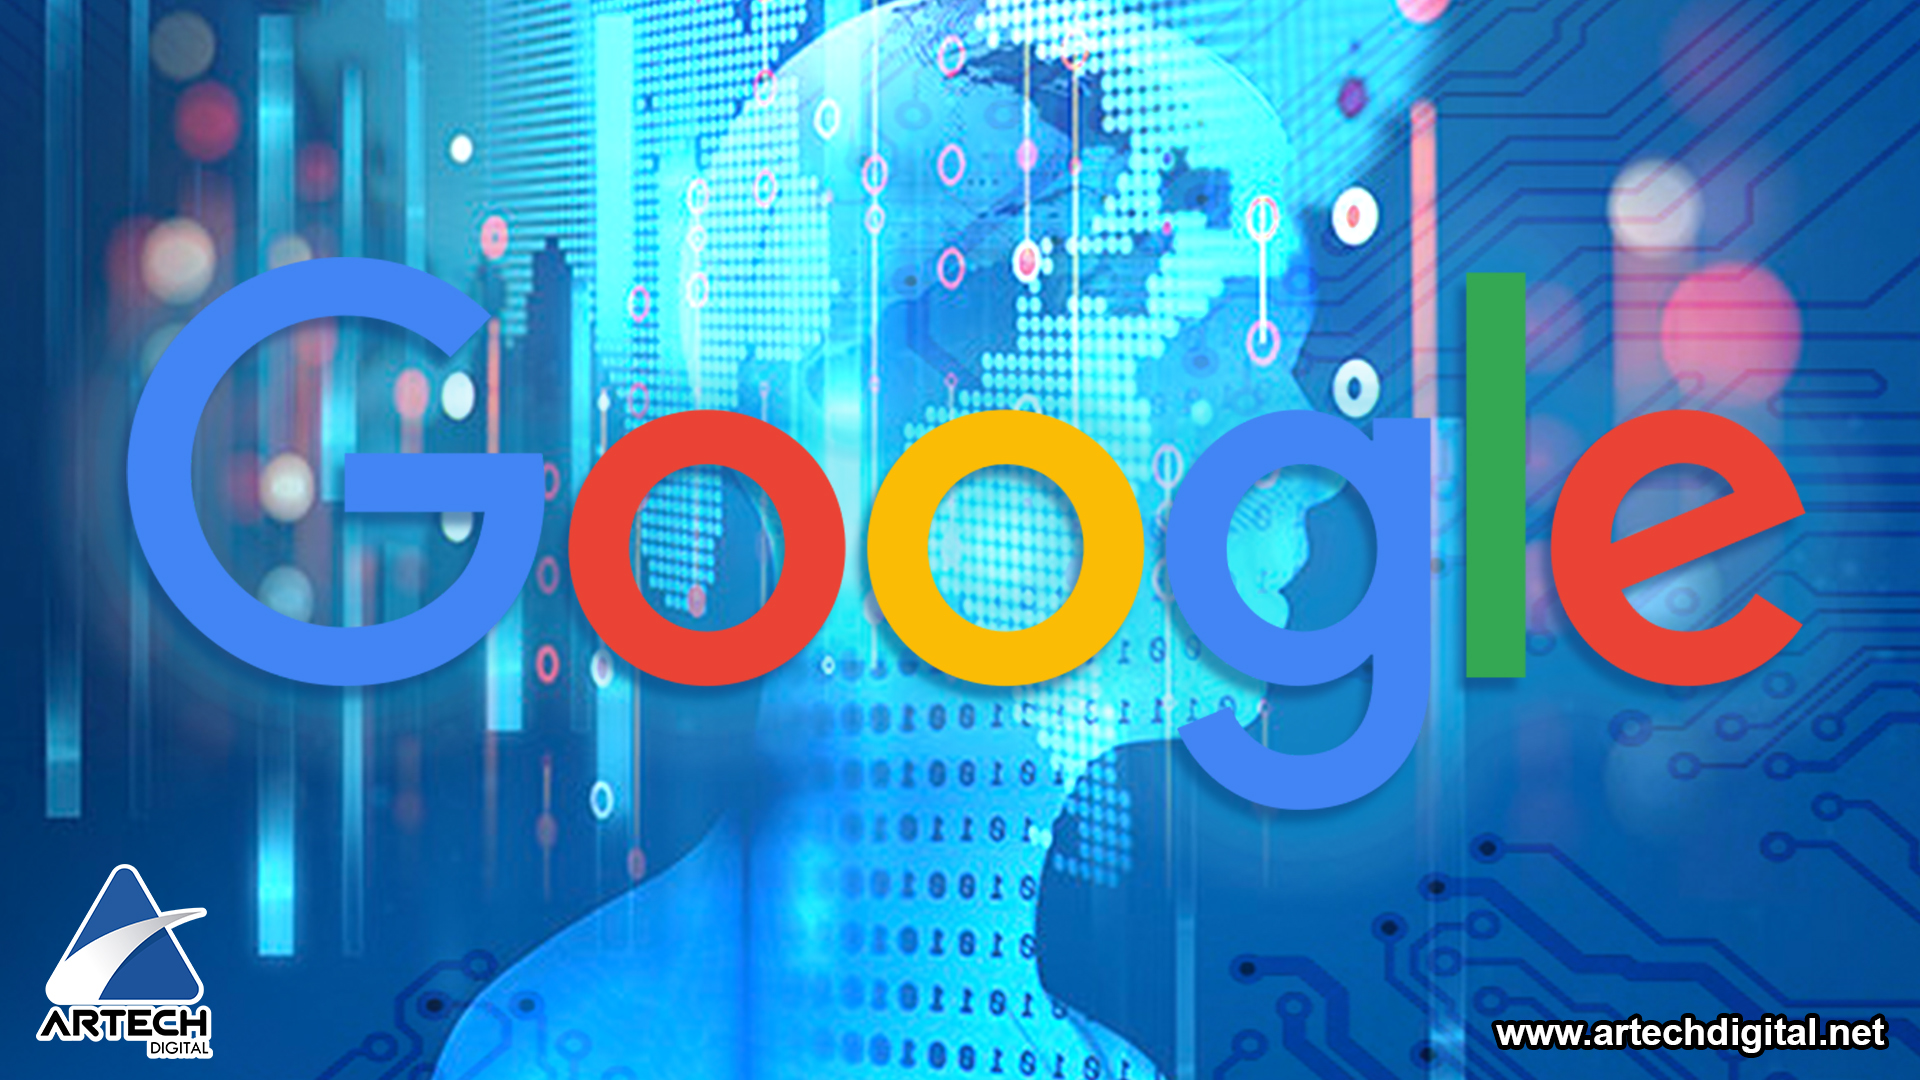 artech digital - google - inteligencia artificial